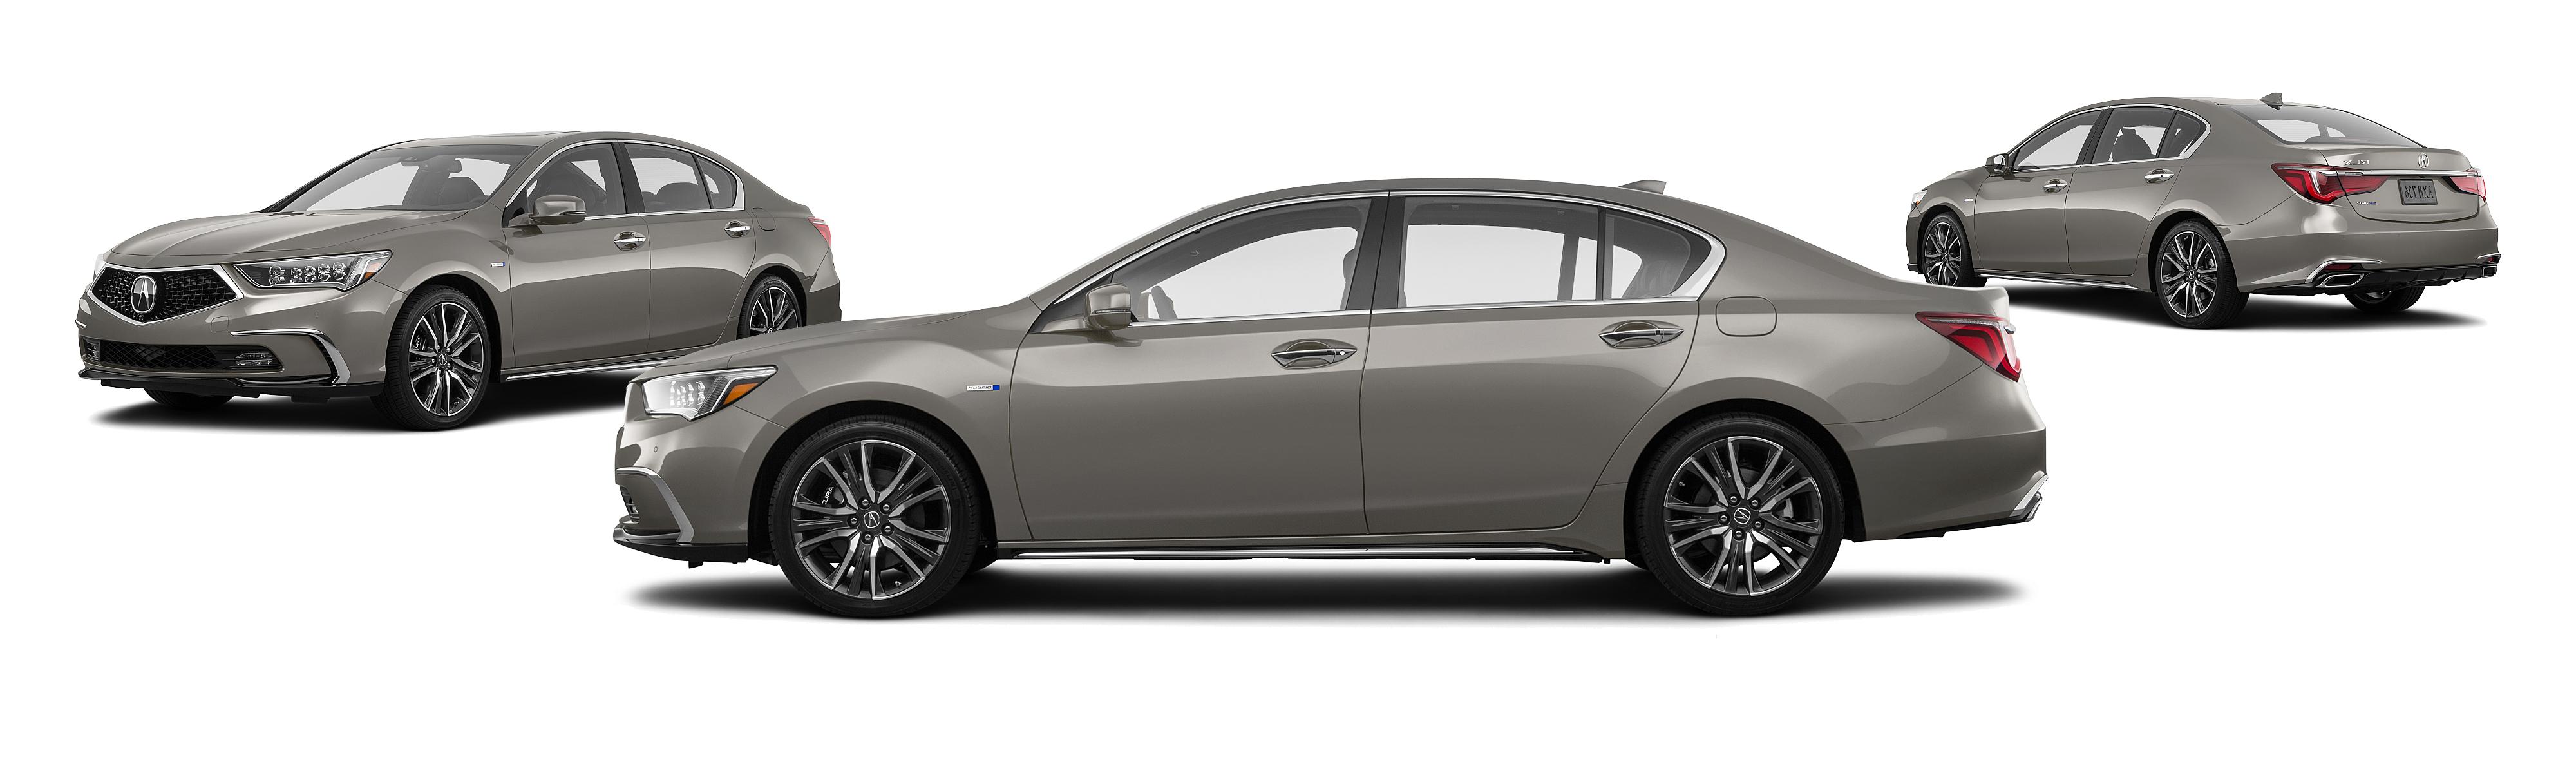 2019 Acura RLX SH-AWD Sport Hybrid 4dr Sedan w/Advance Package - Research -  GrooveCar